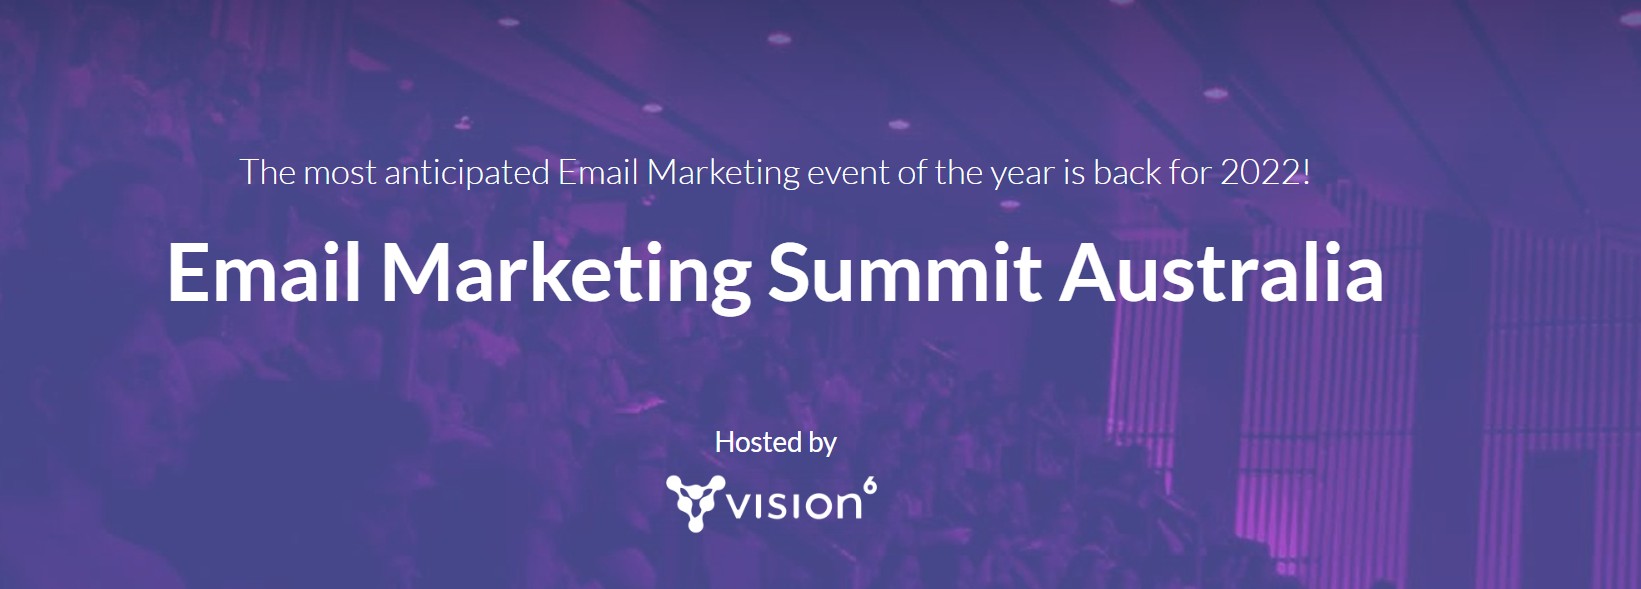 Email Marketing Summit Australia